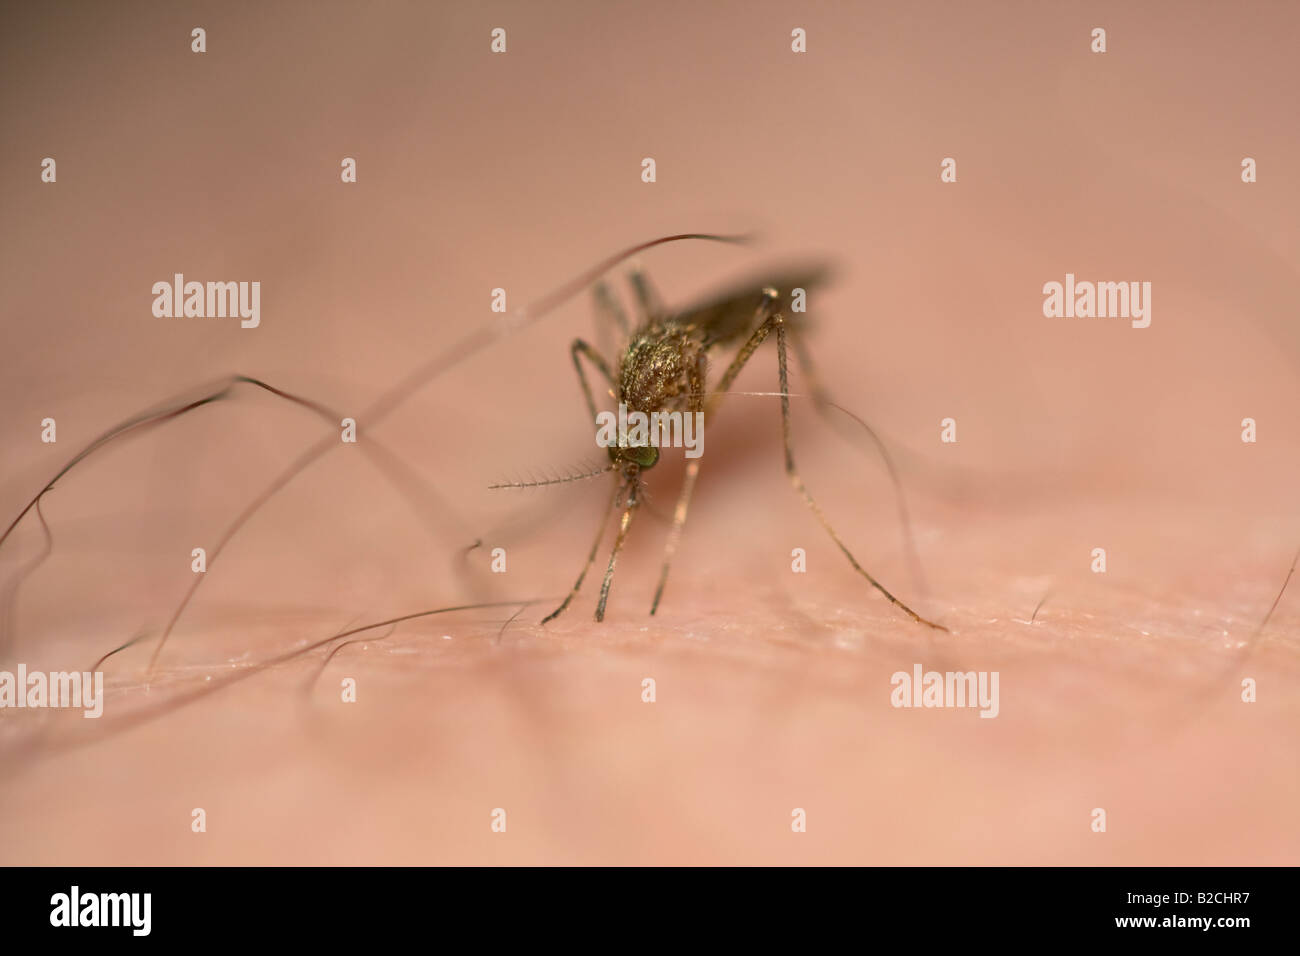 Mosquito feeding on human blood Stock Photo